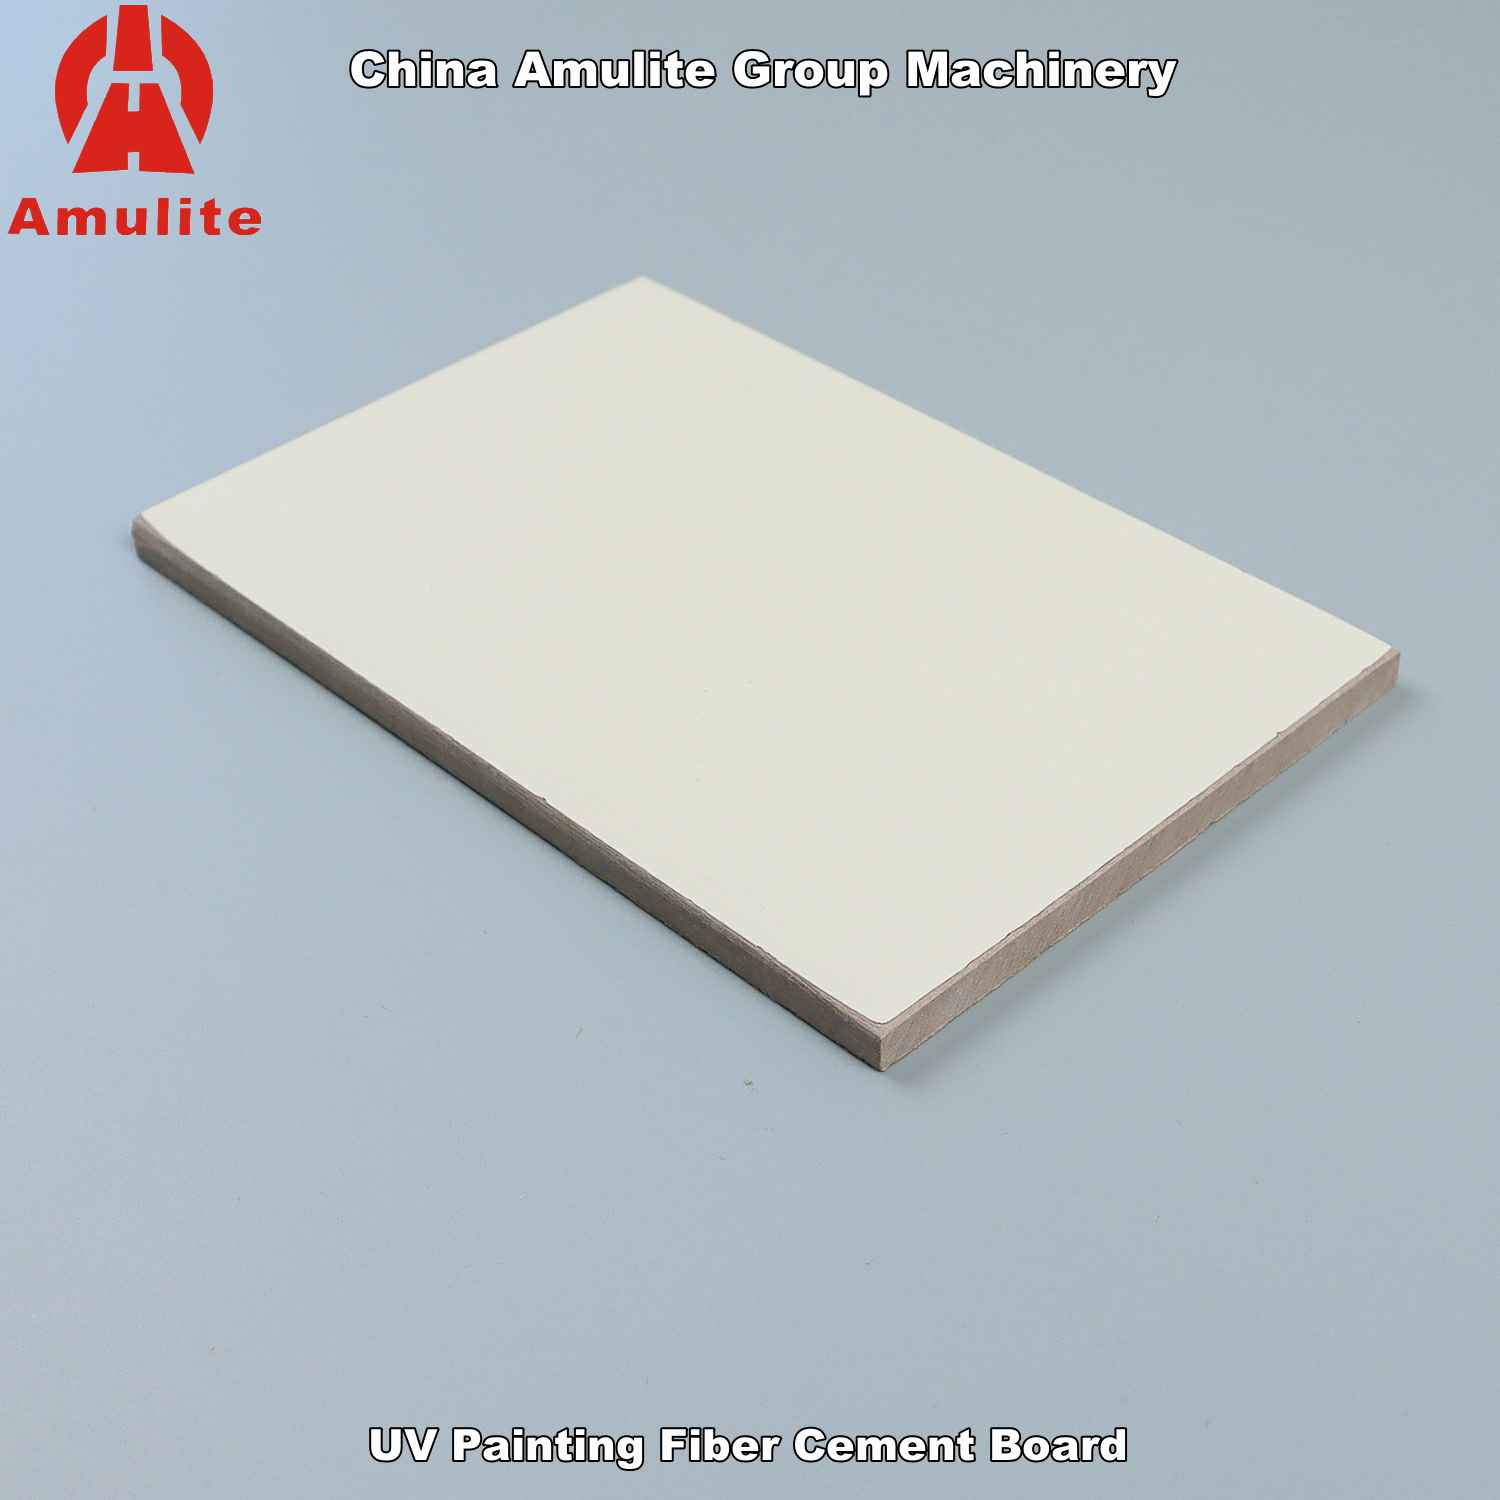 UV Painting Fiber Cement Board (18)